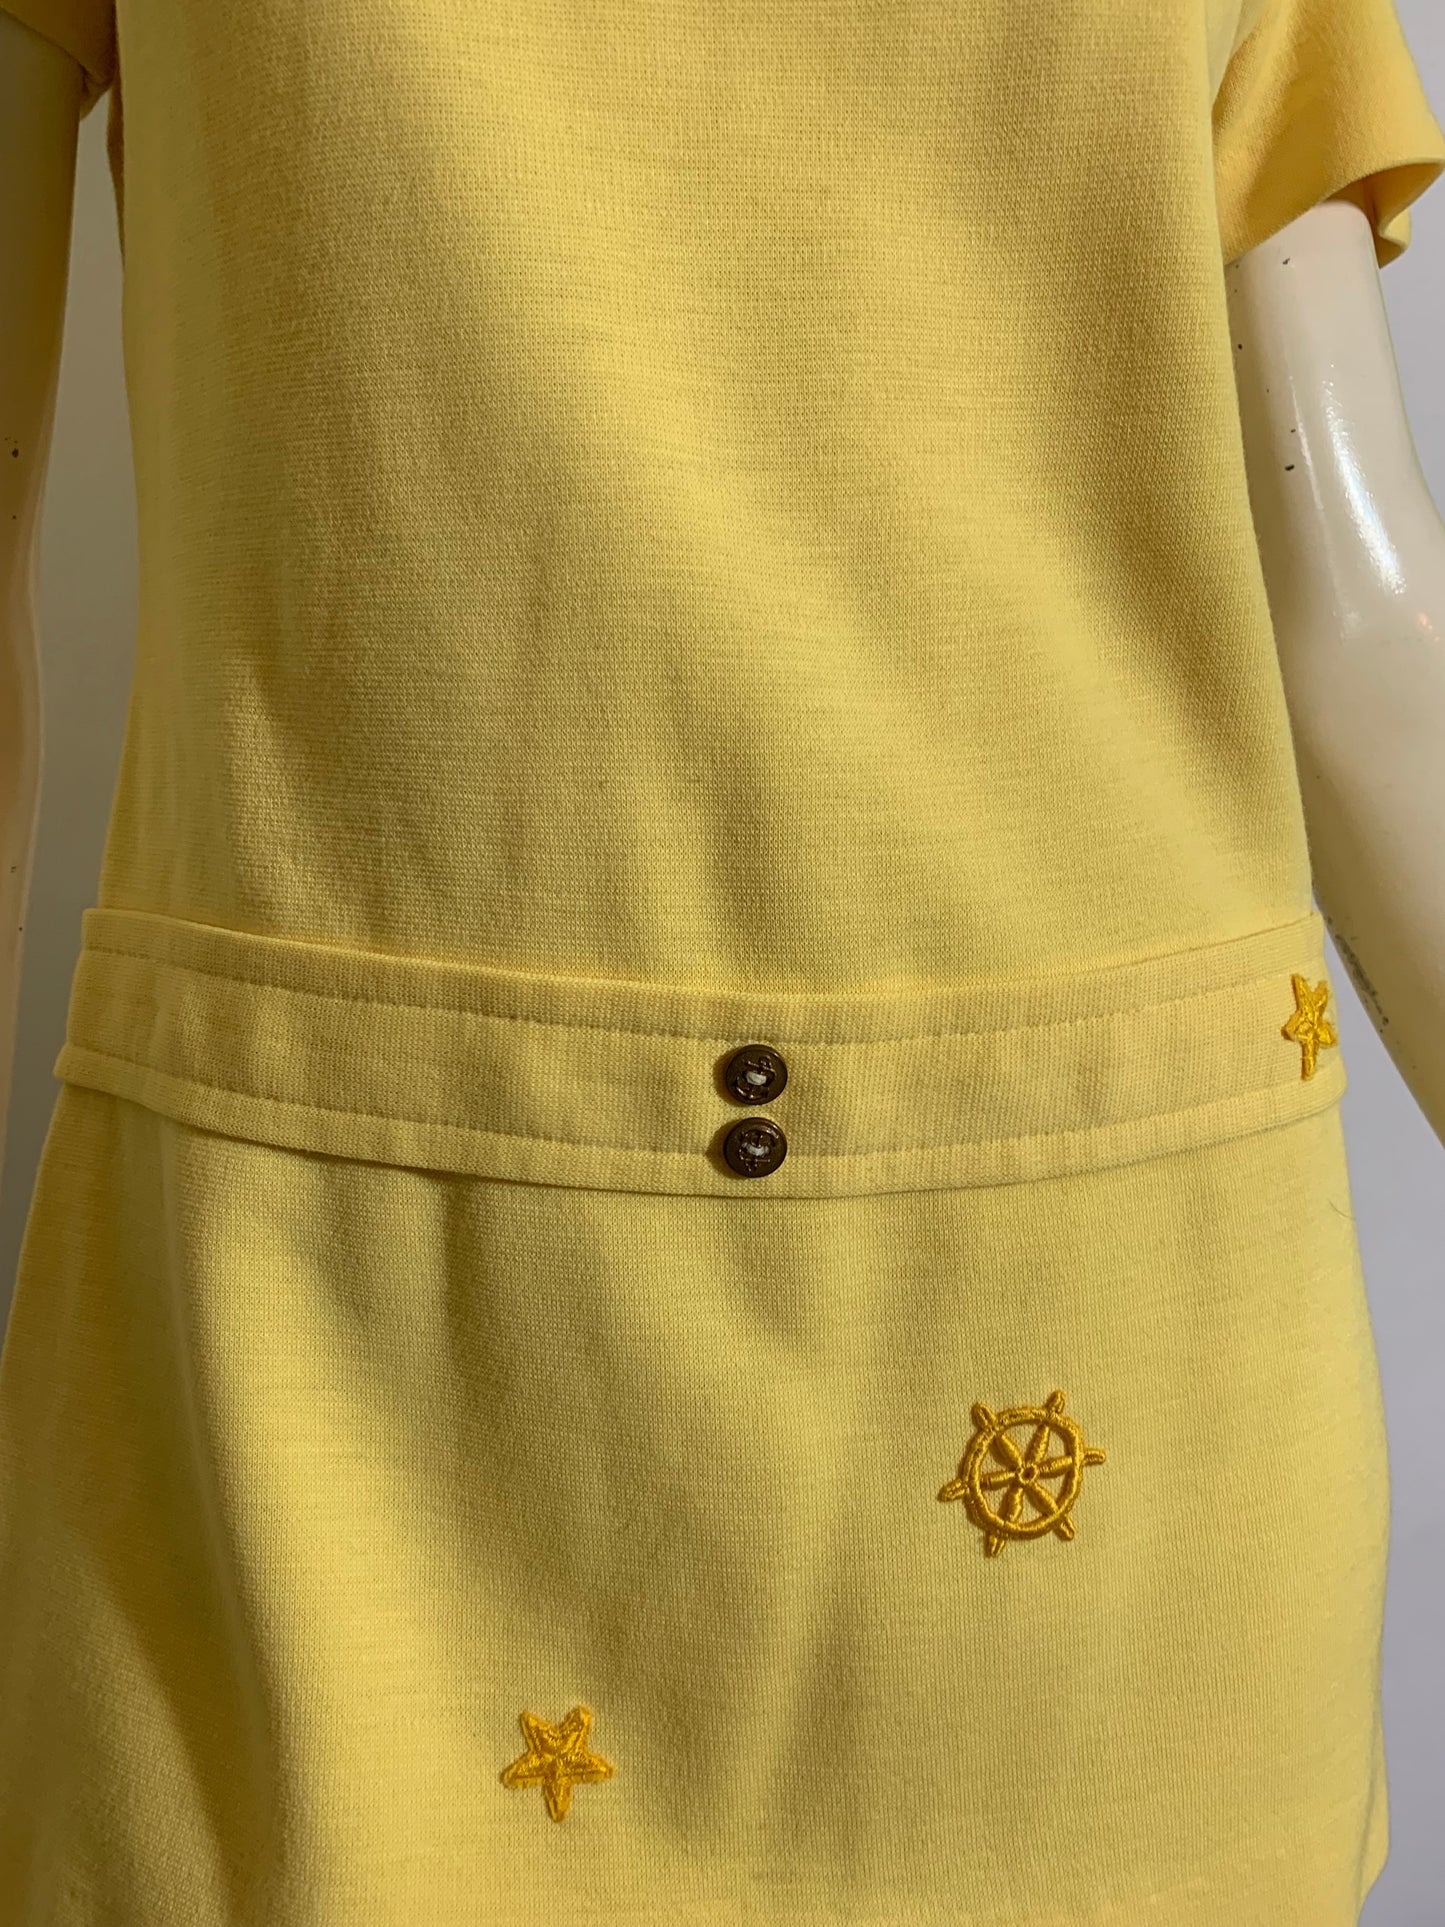 Nautical Themed Lemon Yellow Tunic Micro Mini Dress circa 1970s